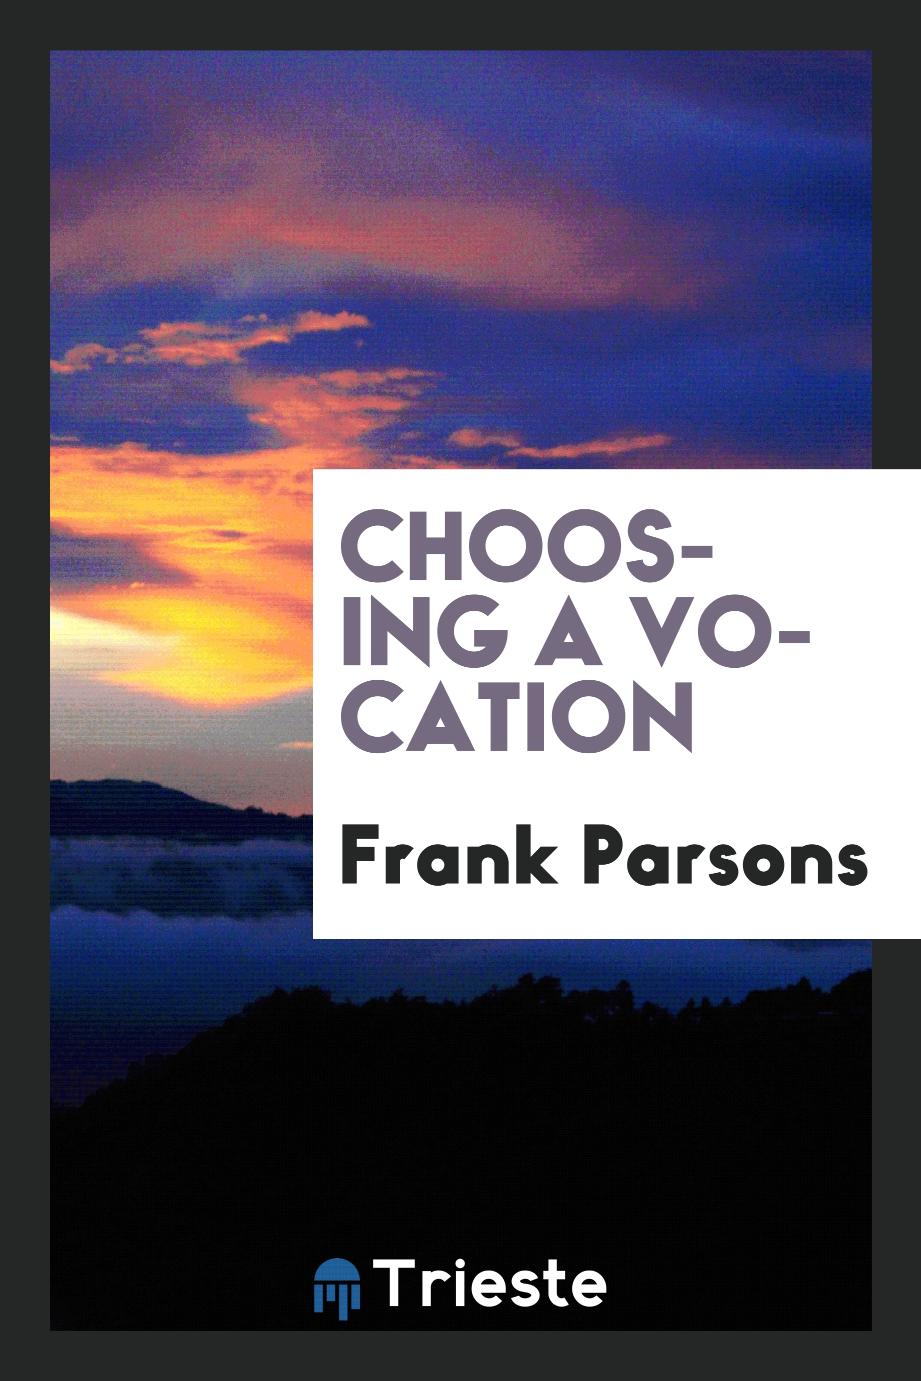 Frank Parsons - Choosing a vocation